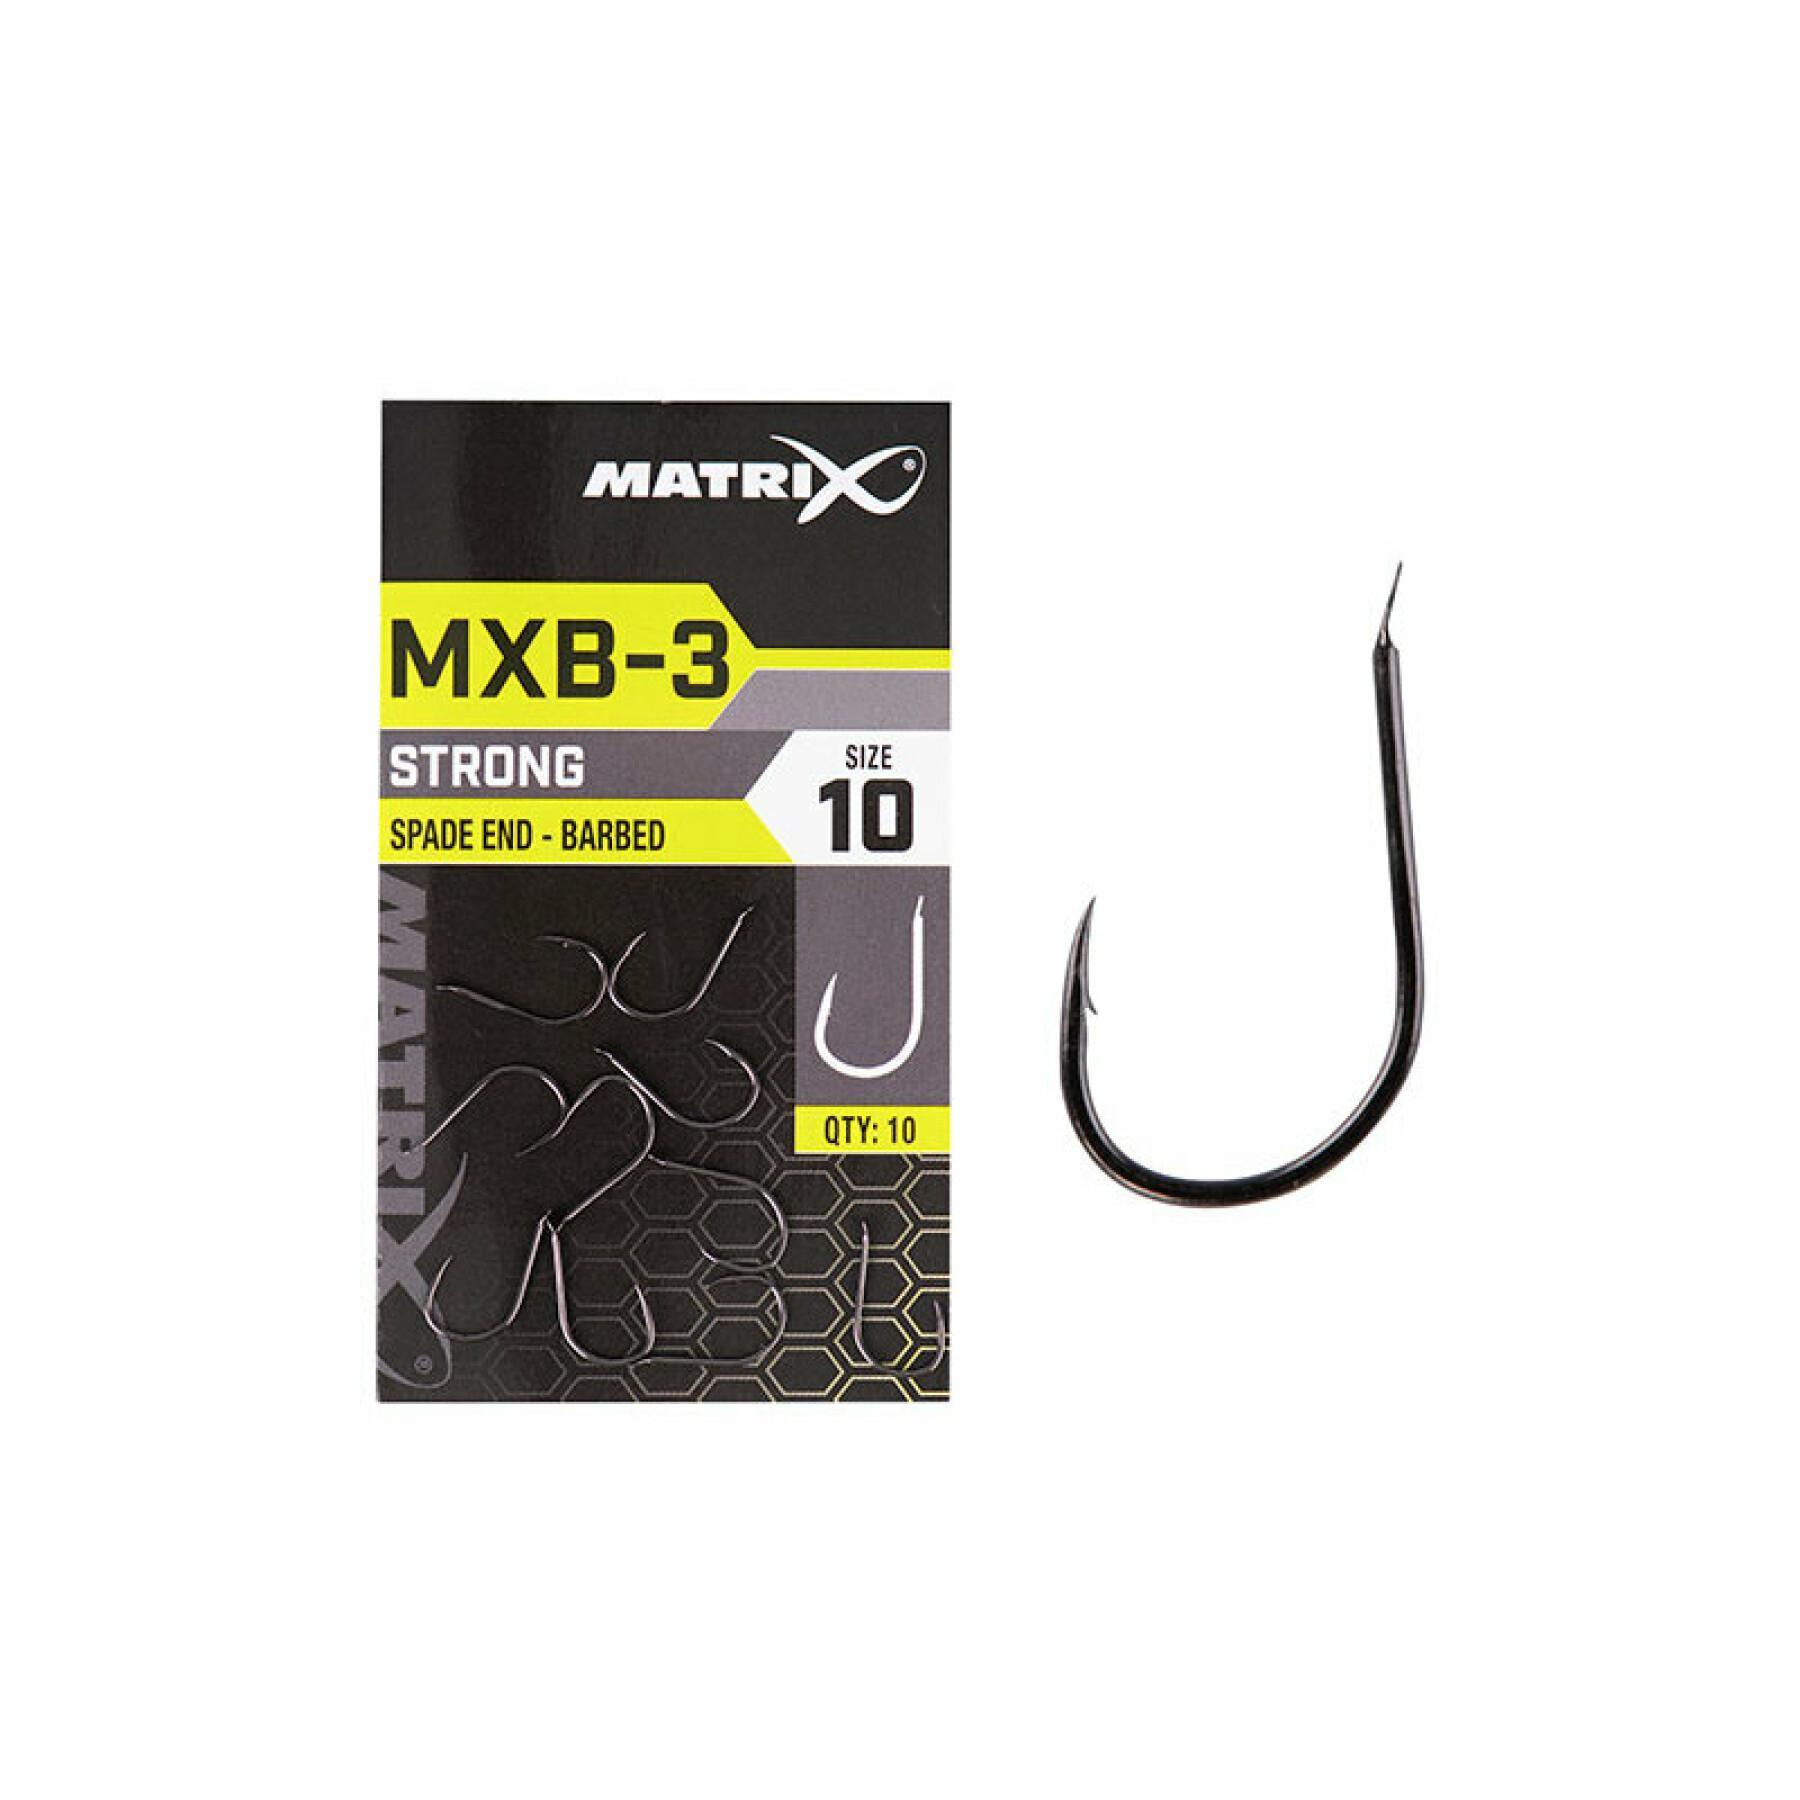 Häkchen Matrix MXB-3 Barbed Spade End x10